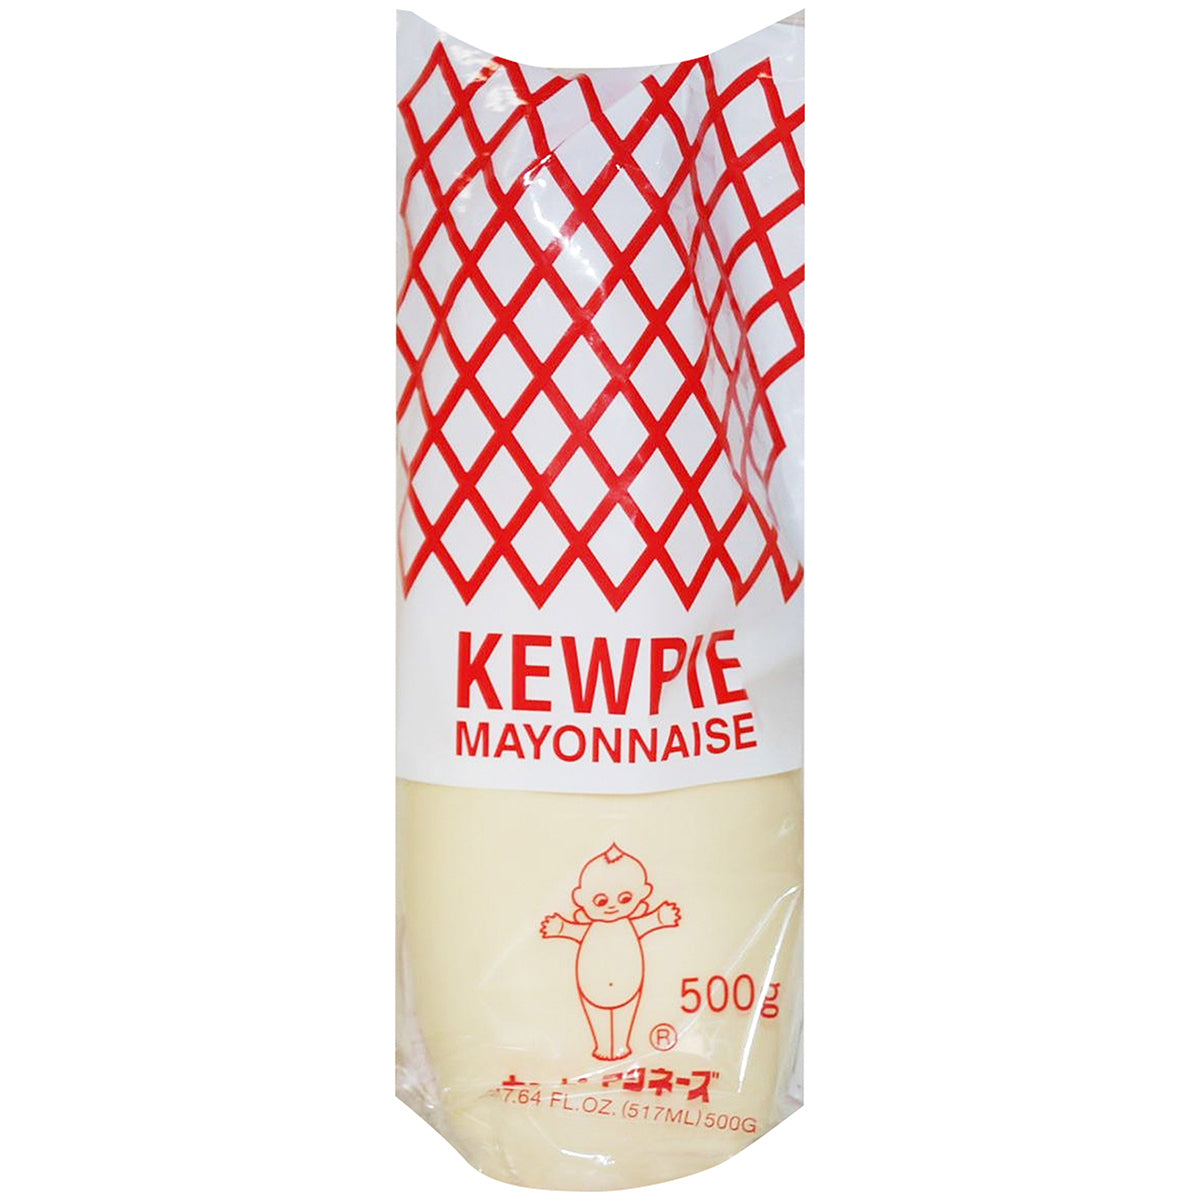 Get Kewpie Mayonnaise Tube 500 g Delivered